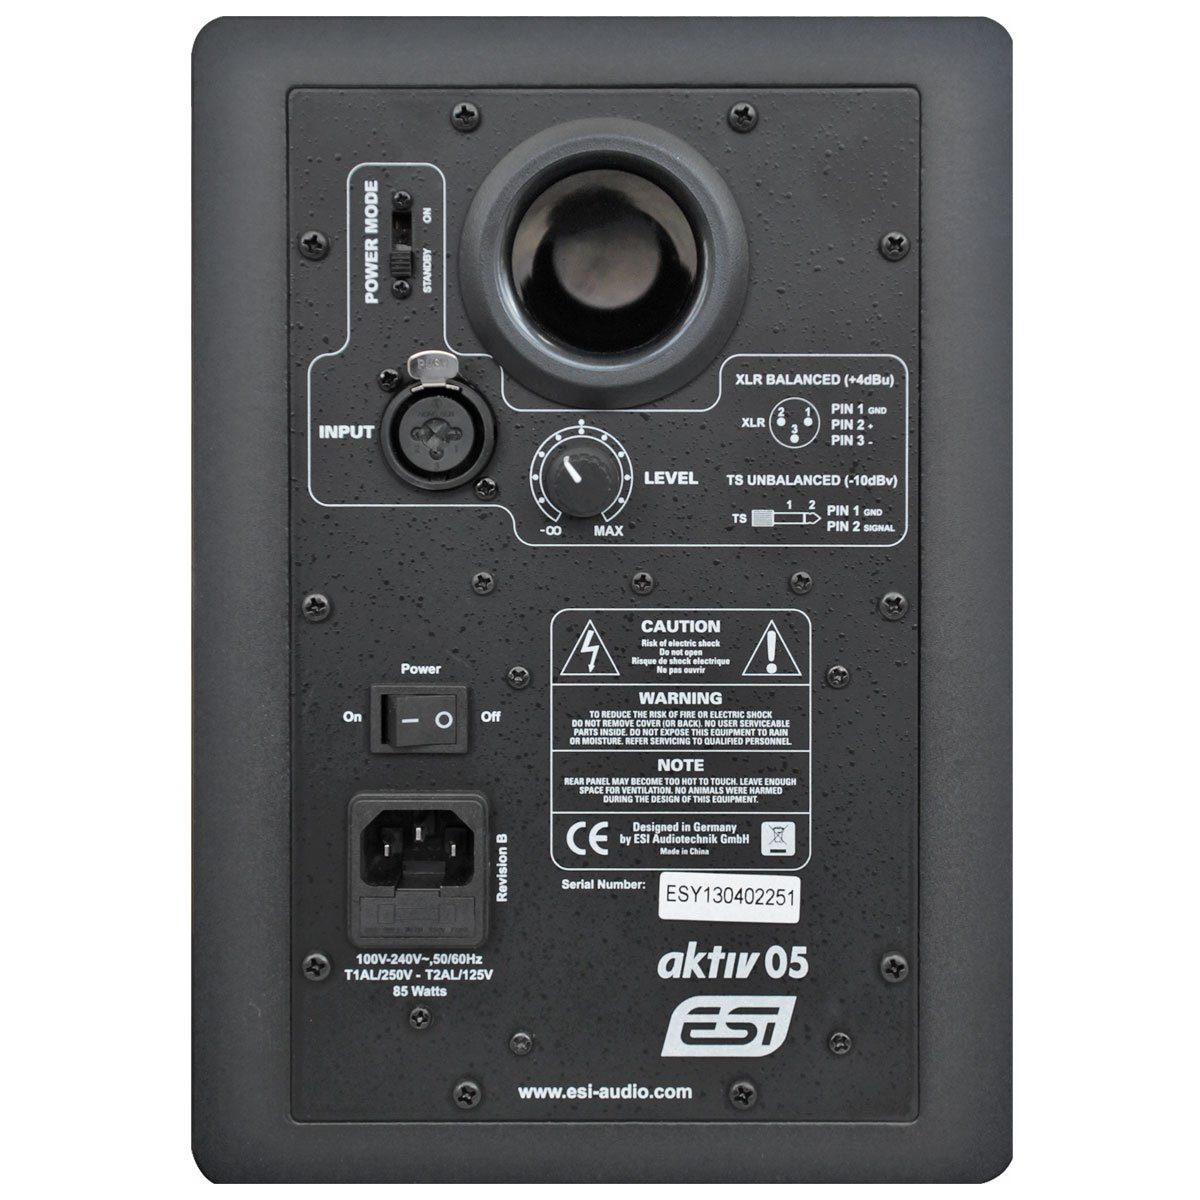 05 Monitor-Boxen 1 Speaker Paar ESI -Audiotechnik ESI Home aktive Aktiv